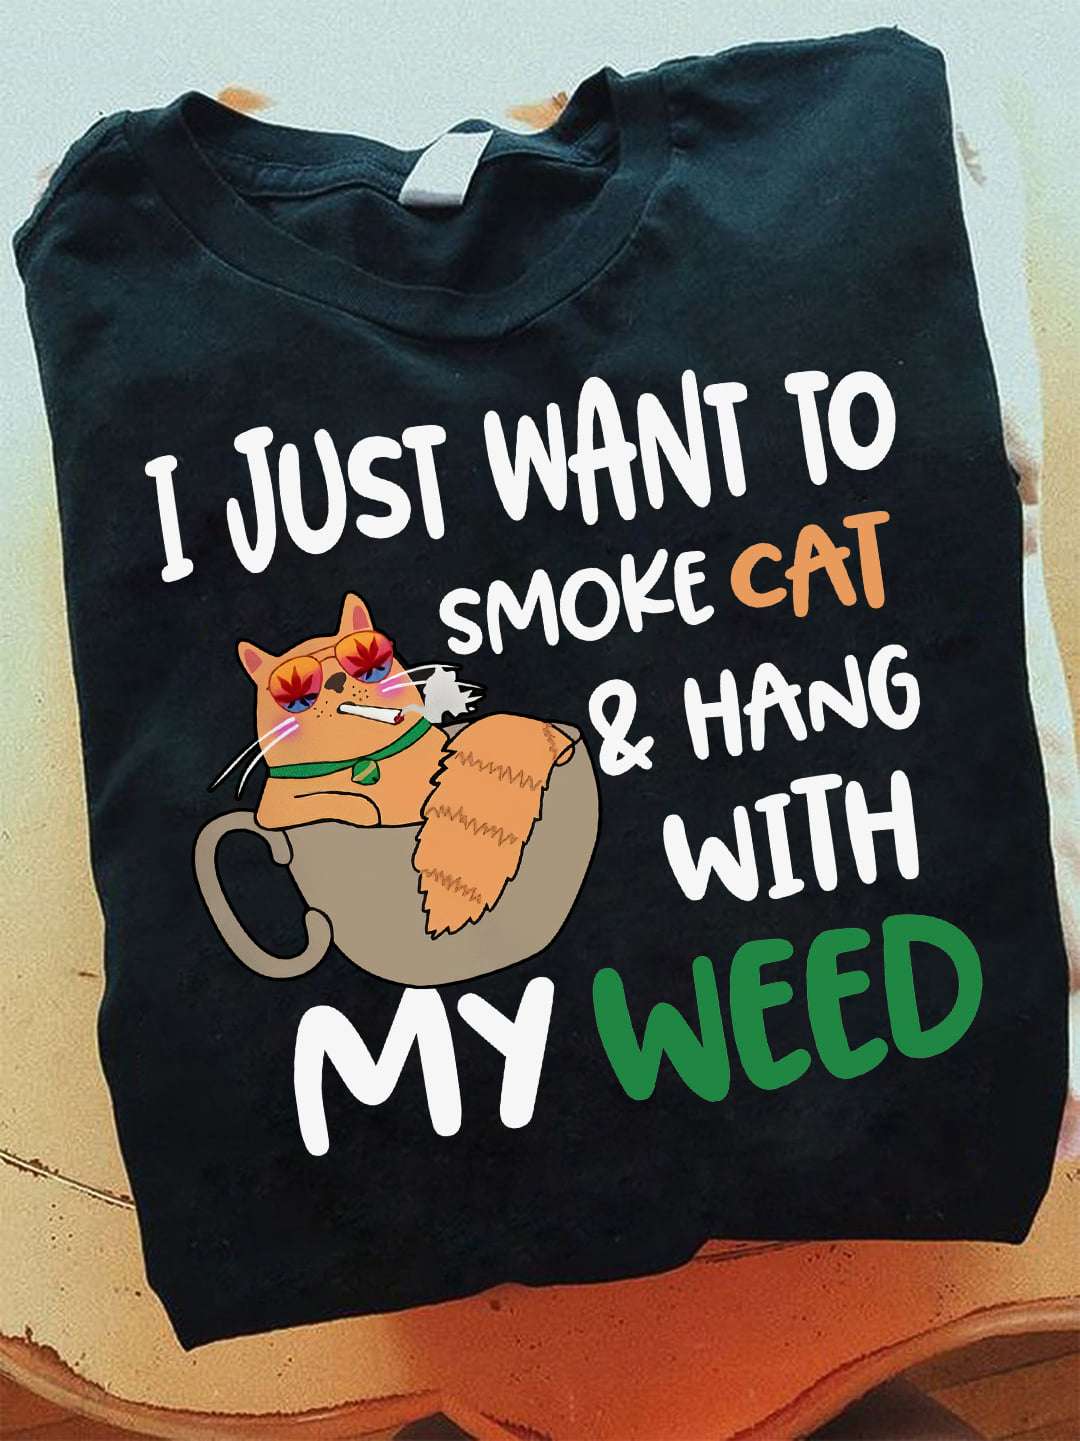 cats smoking weed